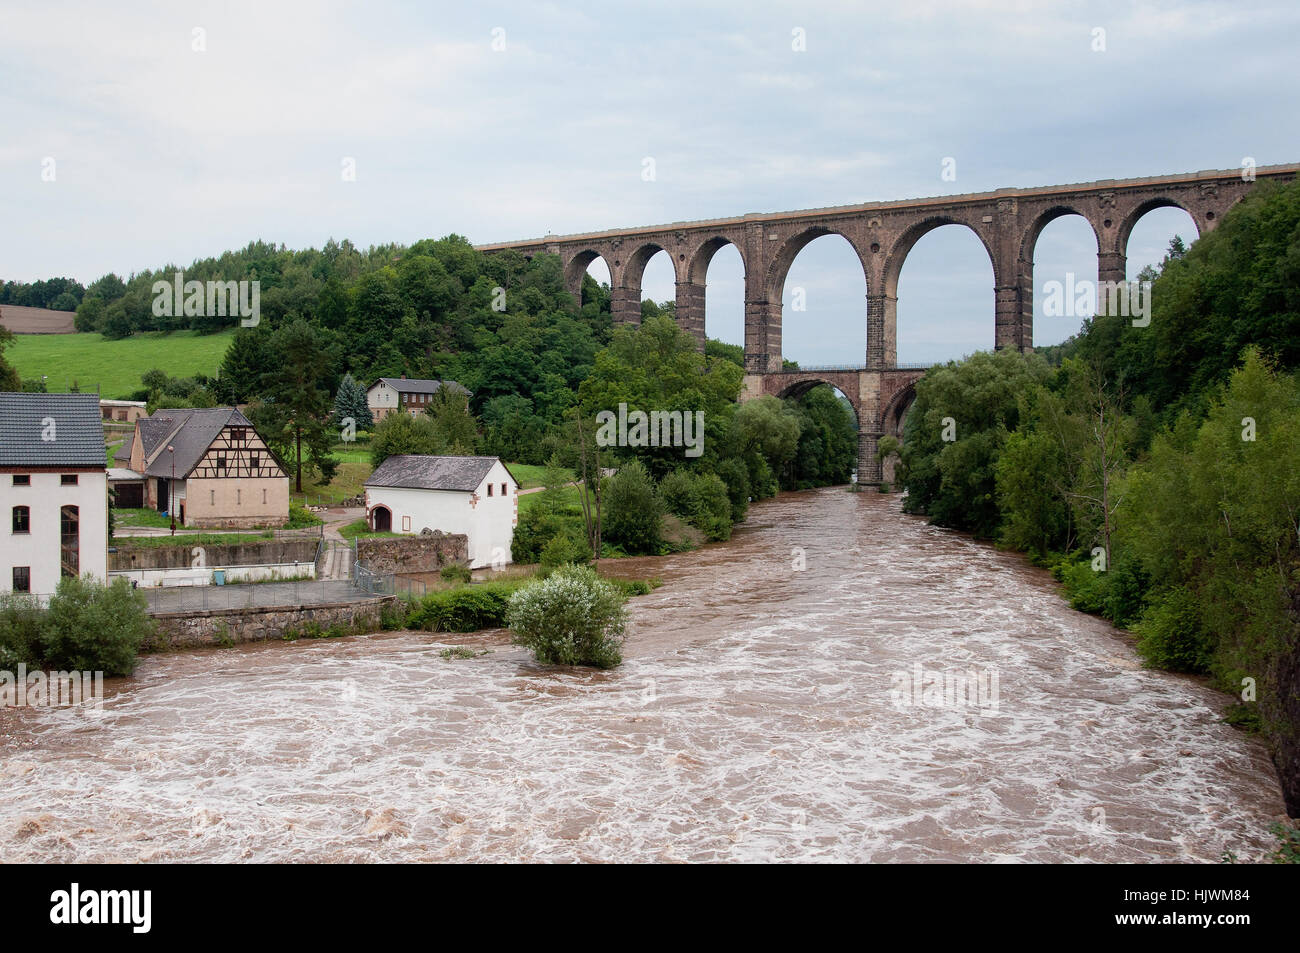 ghrener bridge with flood Stock Photo